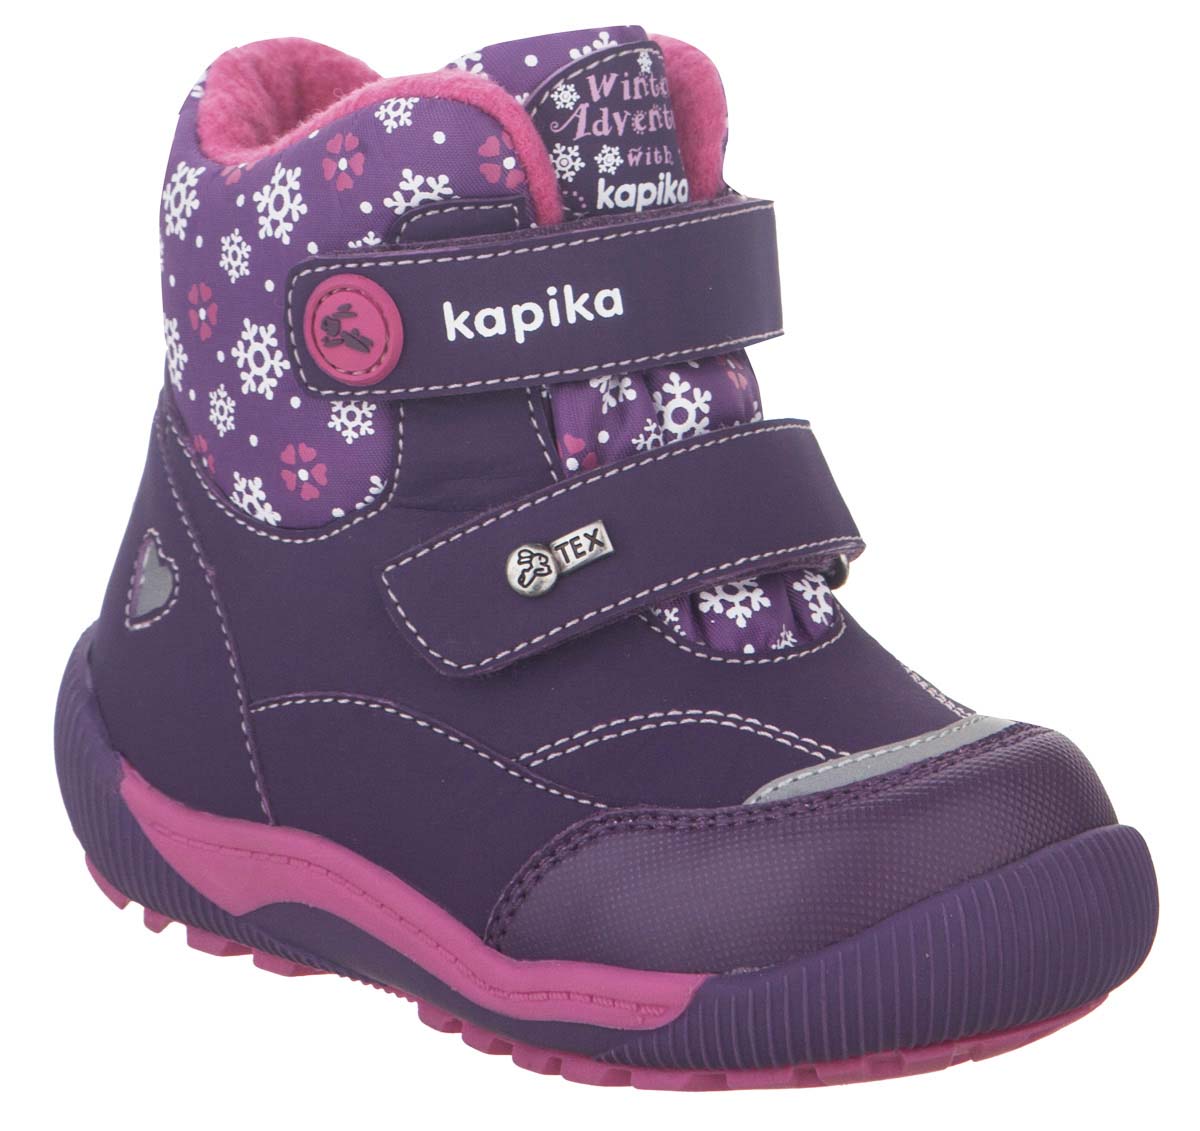 Ботинки для девочки Kapika KapiTEX, цвет: сиреневый. 41185-1. Размер 23